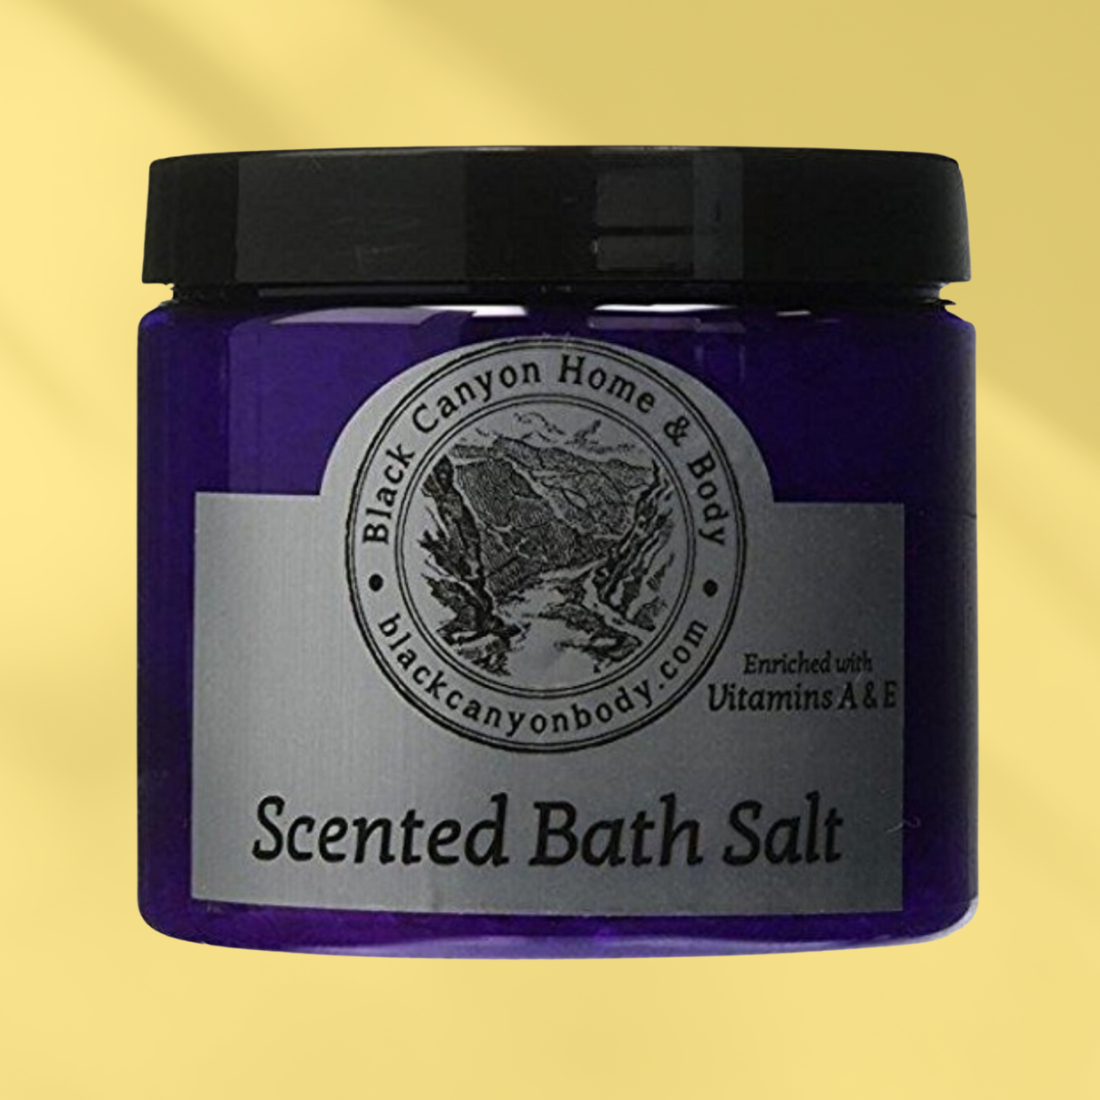 Black Canyon Lily & Rose Scented Epsom Salt Bath Soak